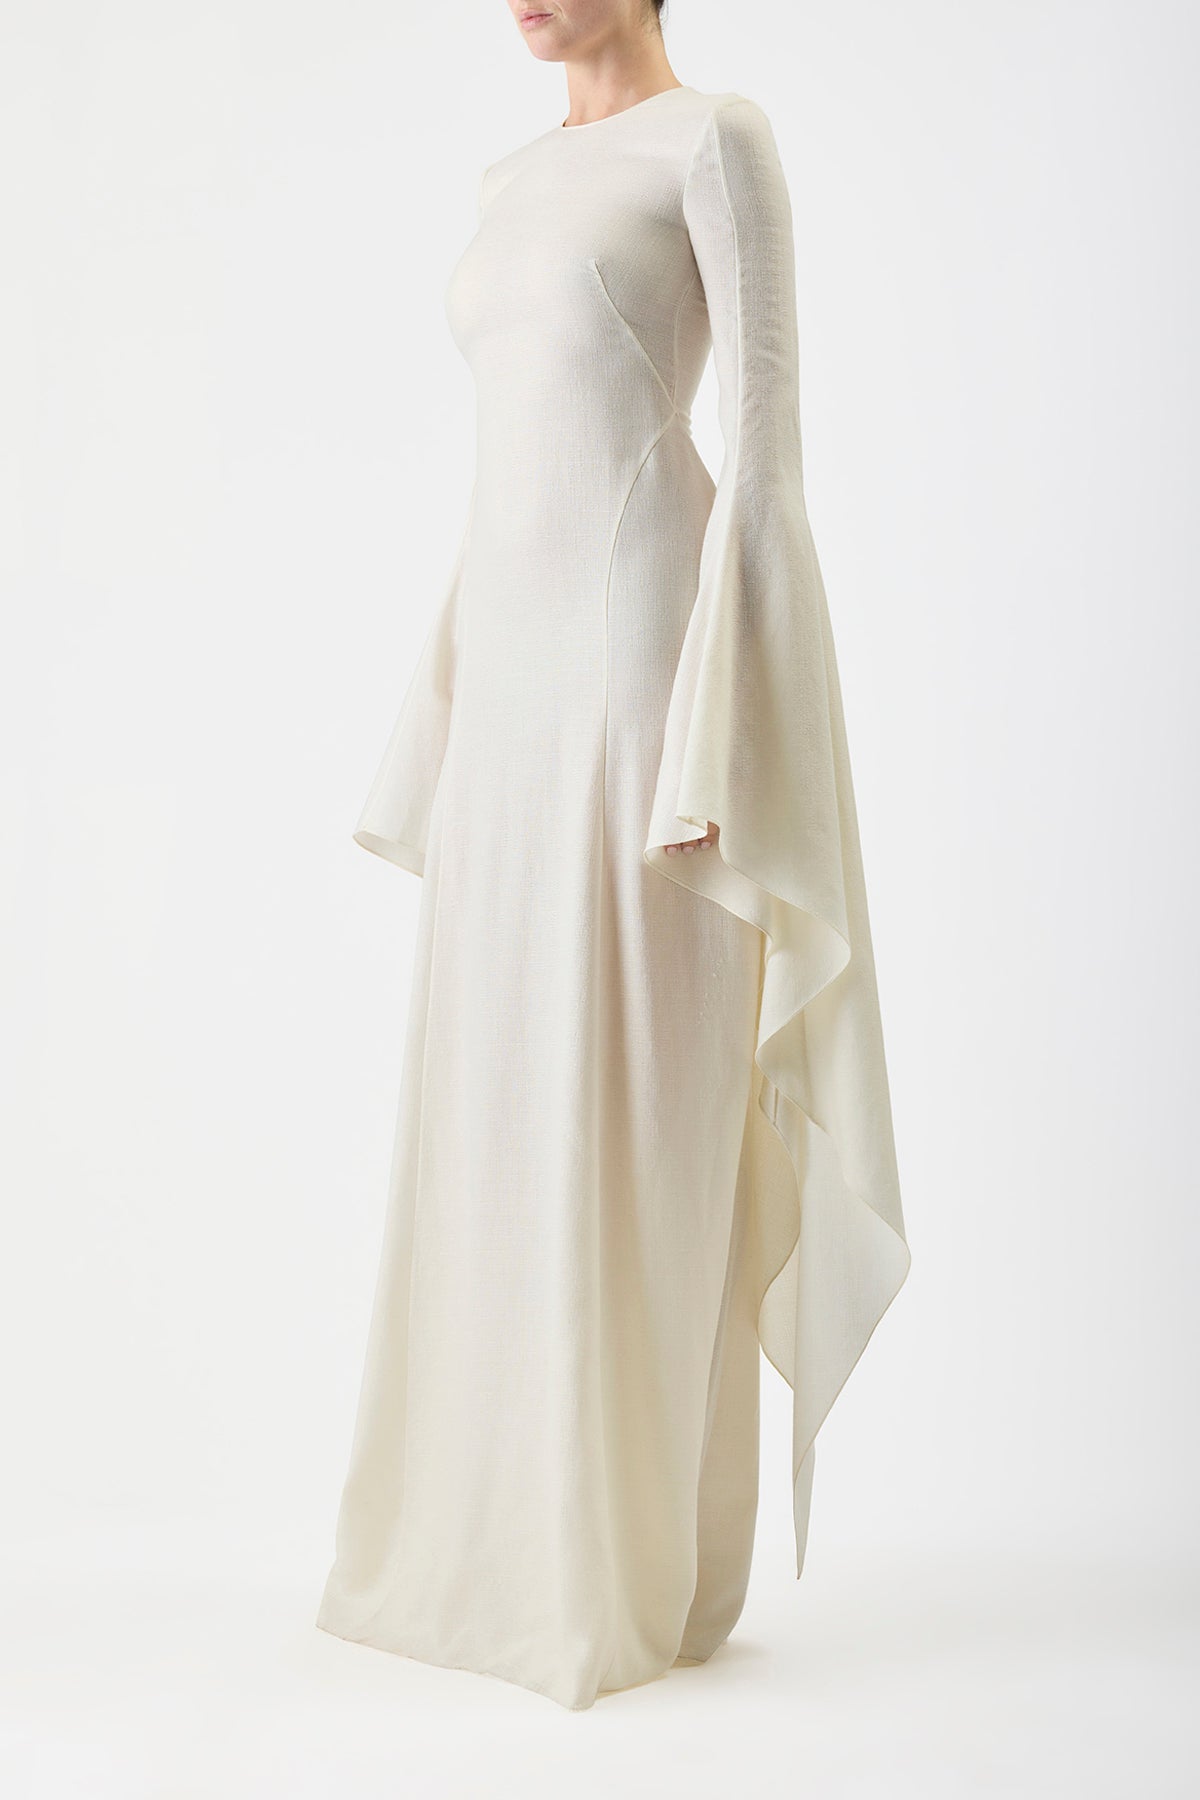 Sigrud Draped Dress in Ivory Silk Wool Gauze